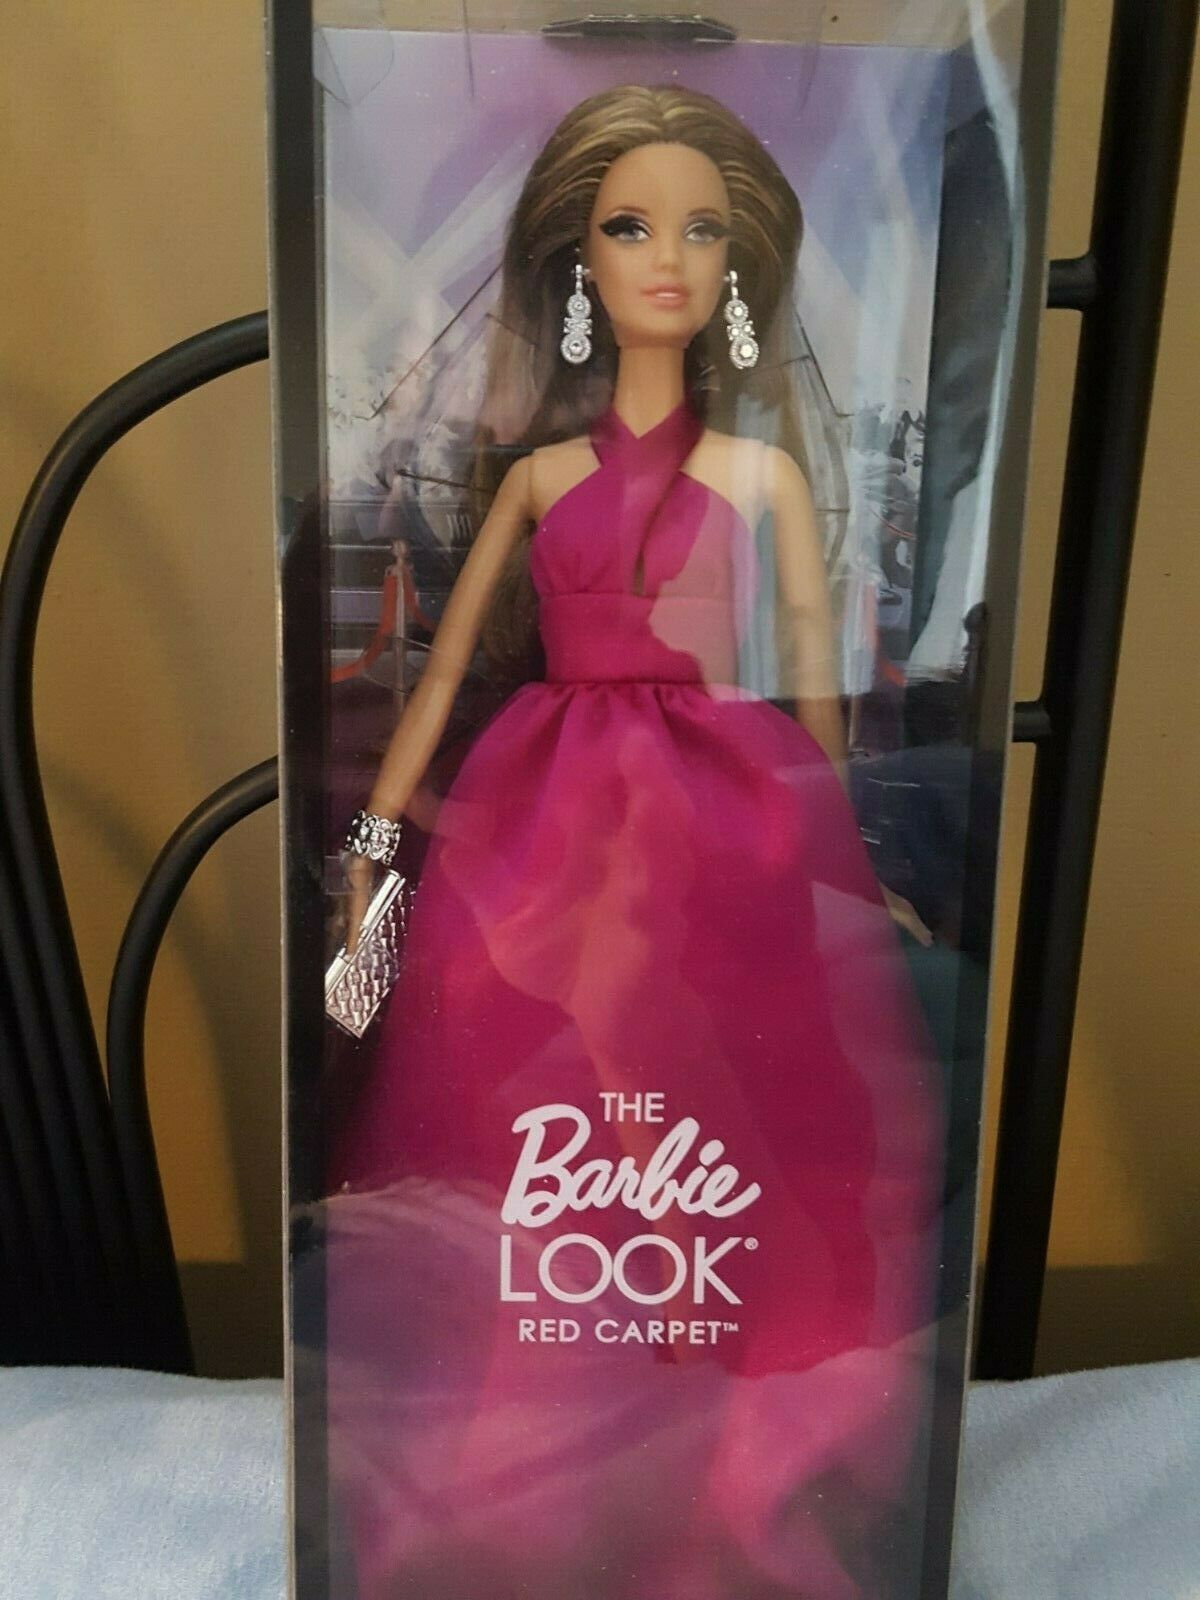 The Barbie Look Red Carpet  Nrfb